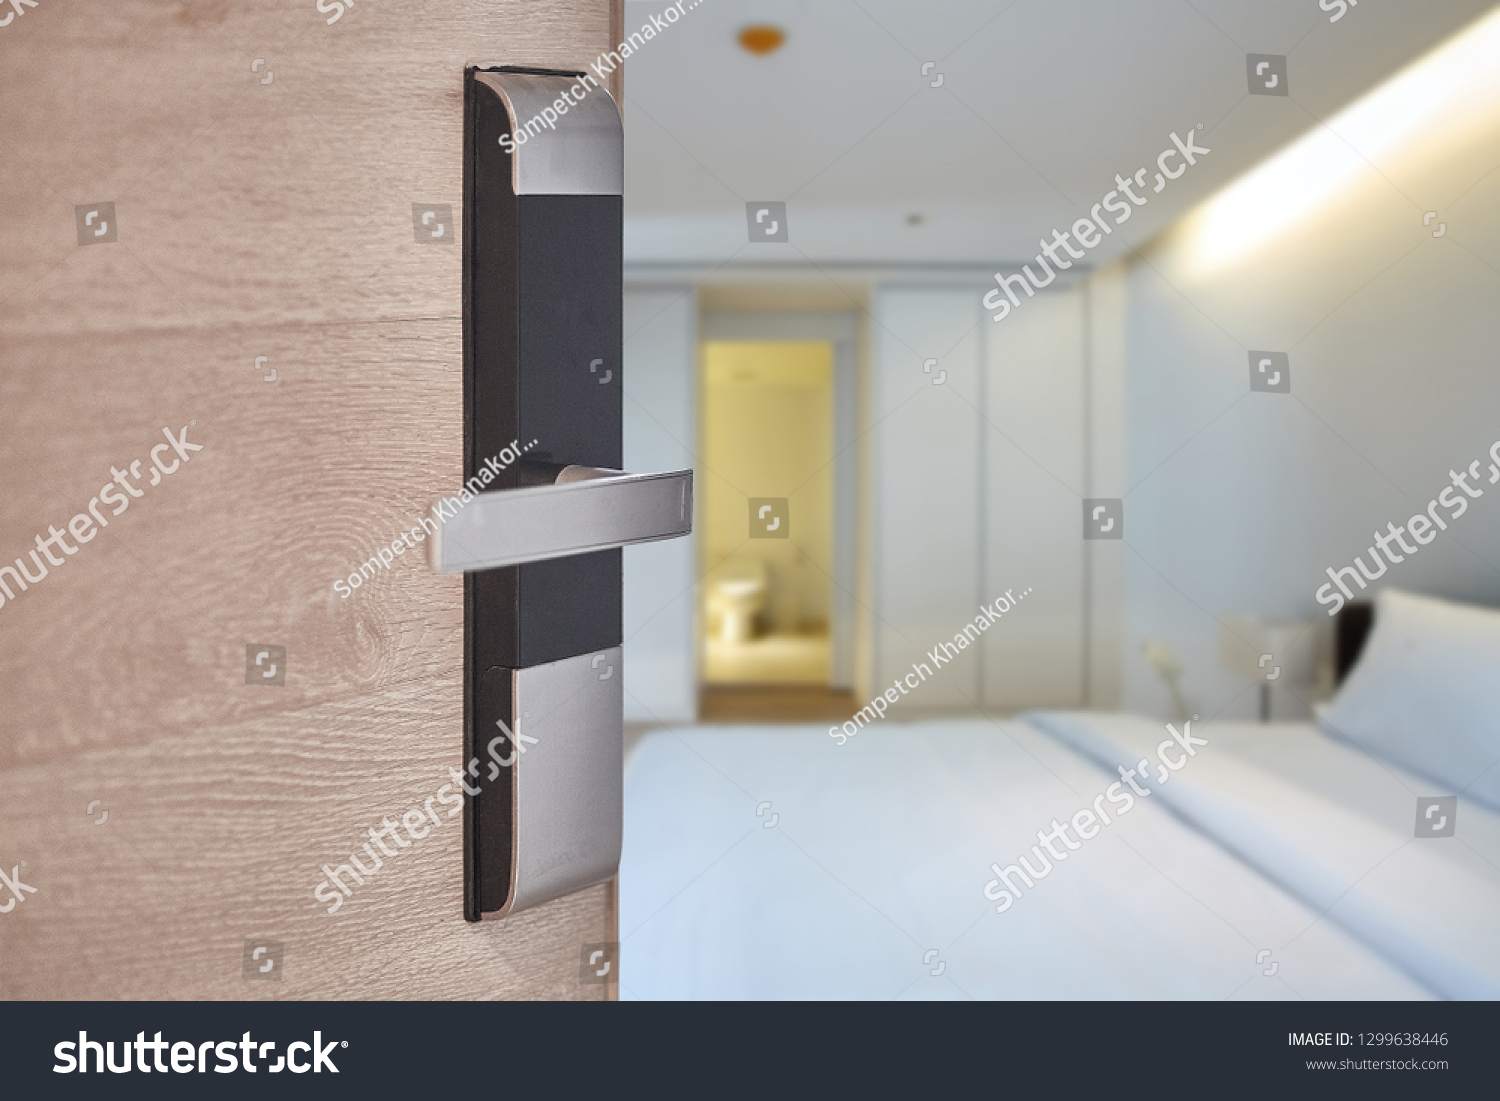 Hotel Apartment Bedroom Door Used Digital Stock Photo Edit